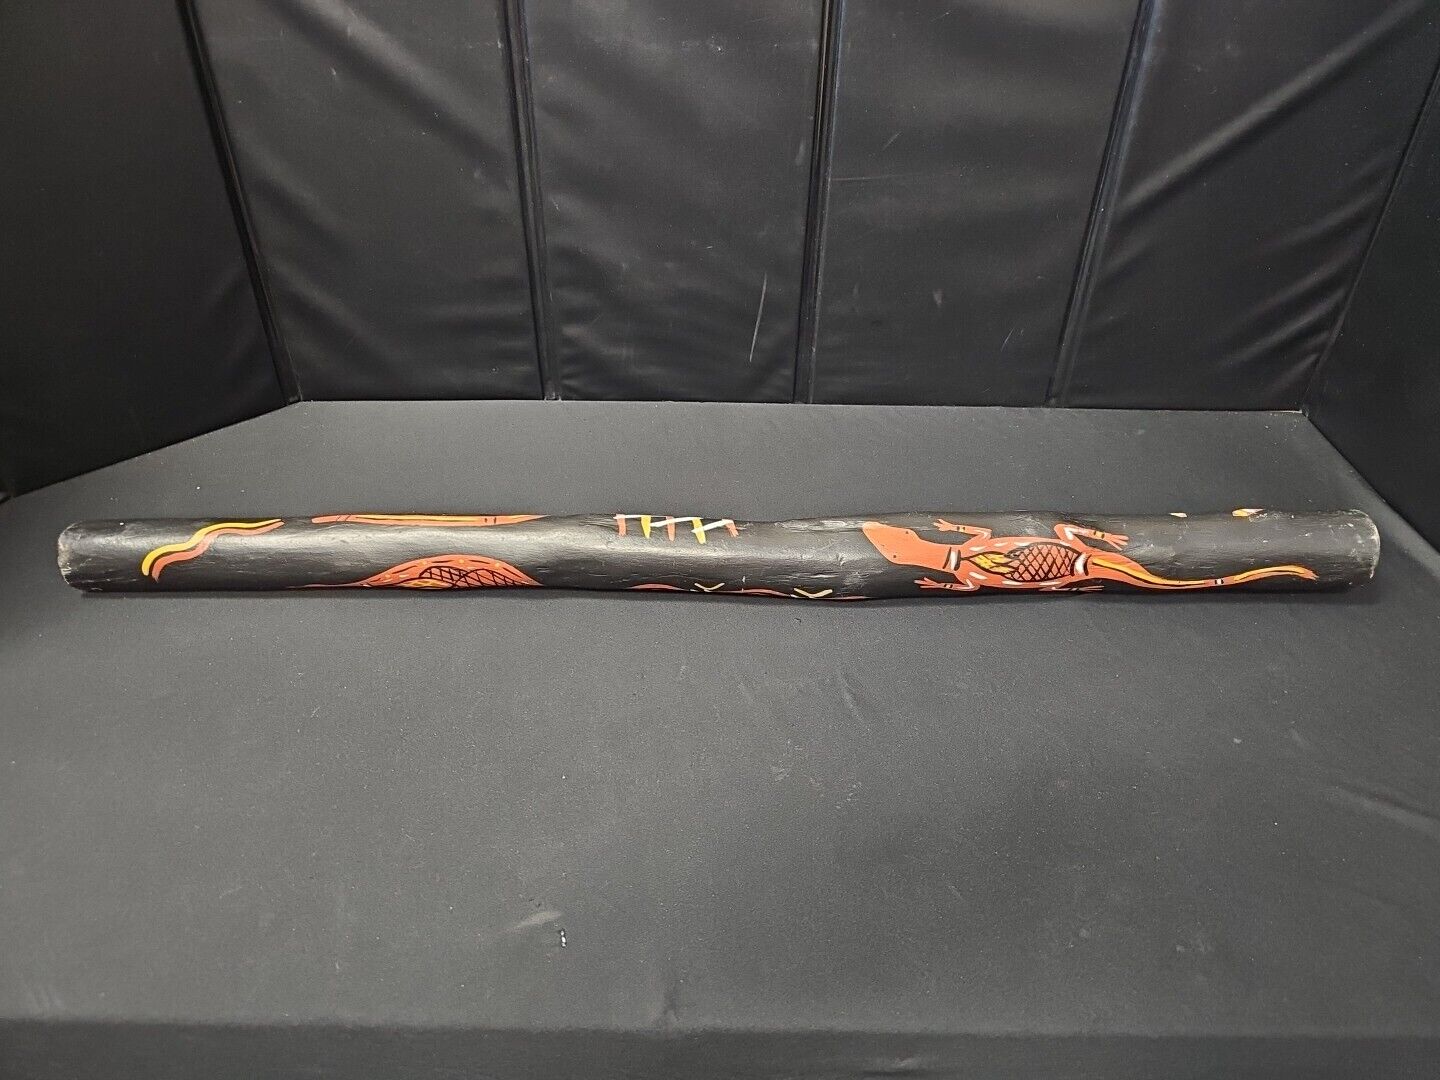 Authentic Aboriginal Australian Didgeridoo Music Instrument Gecko / Kangaroo 36